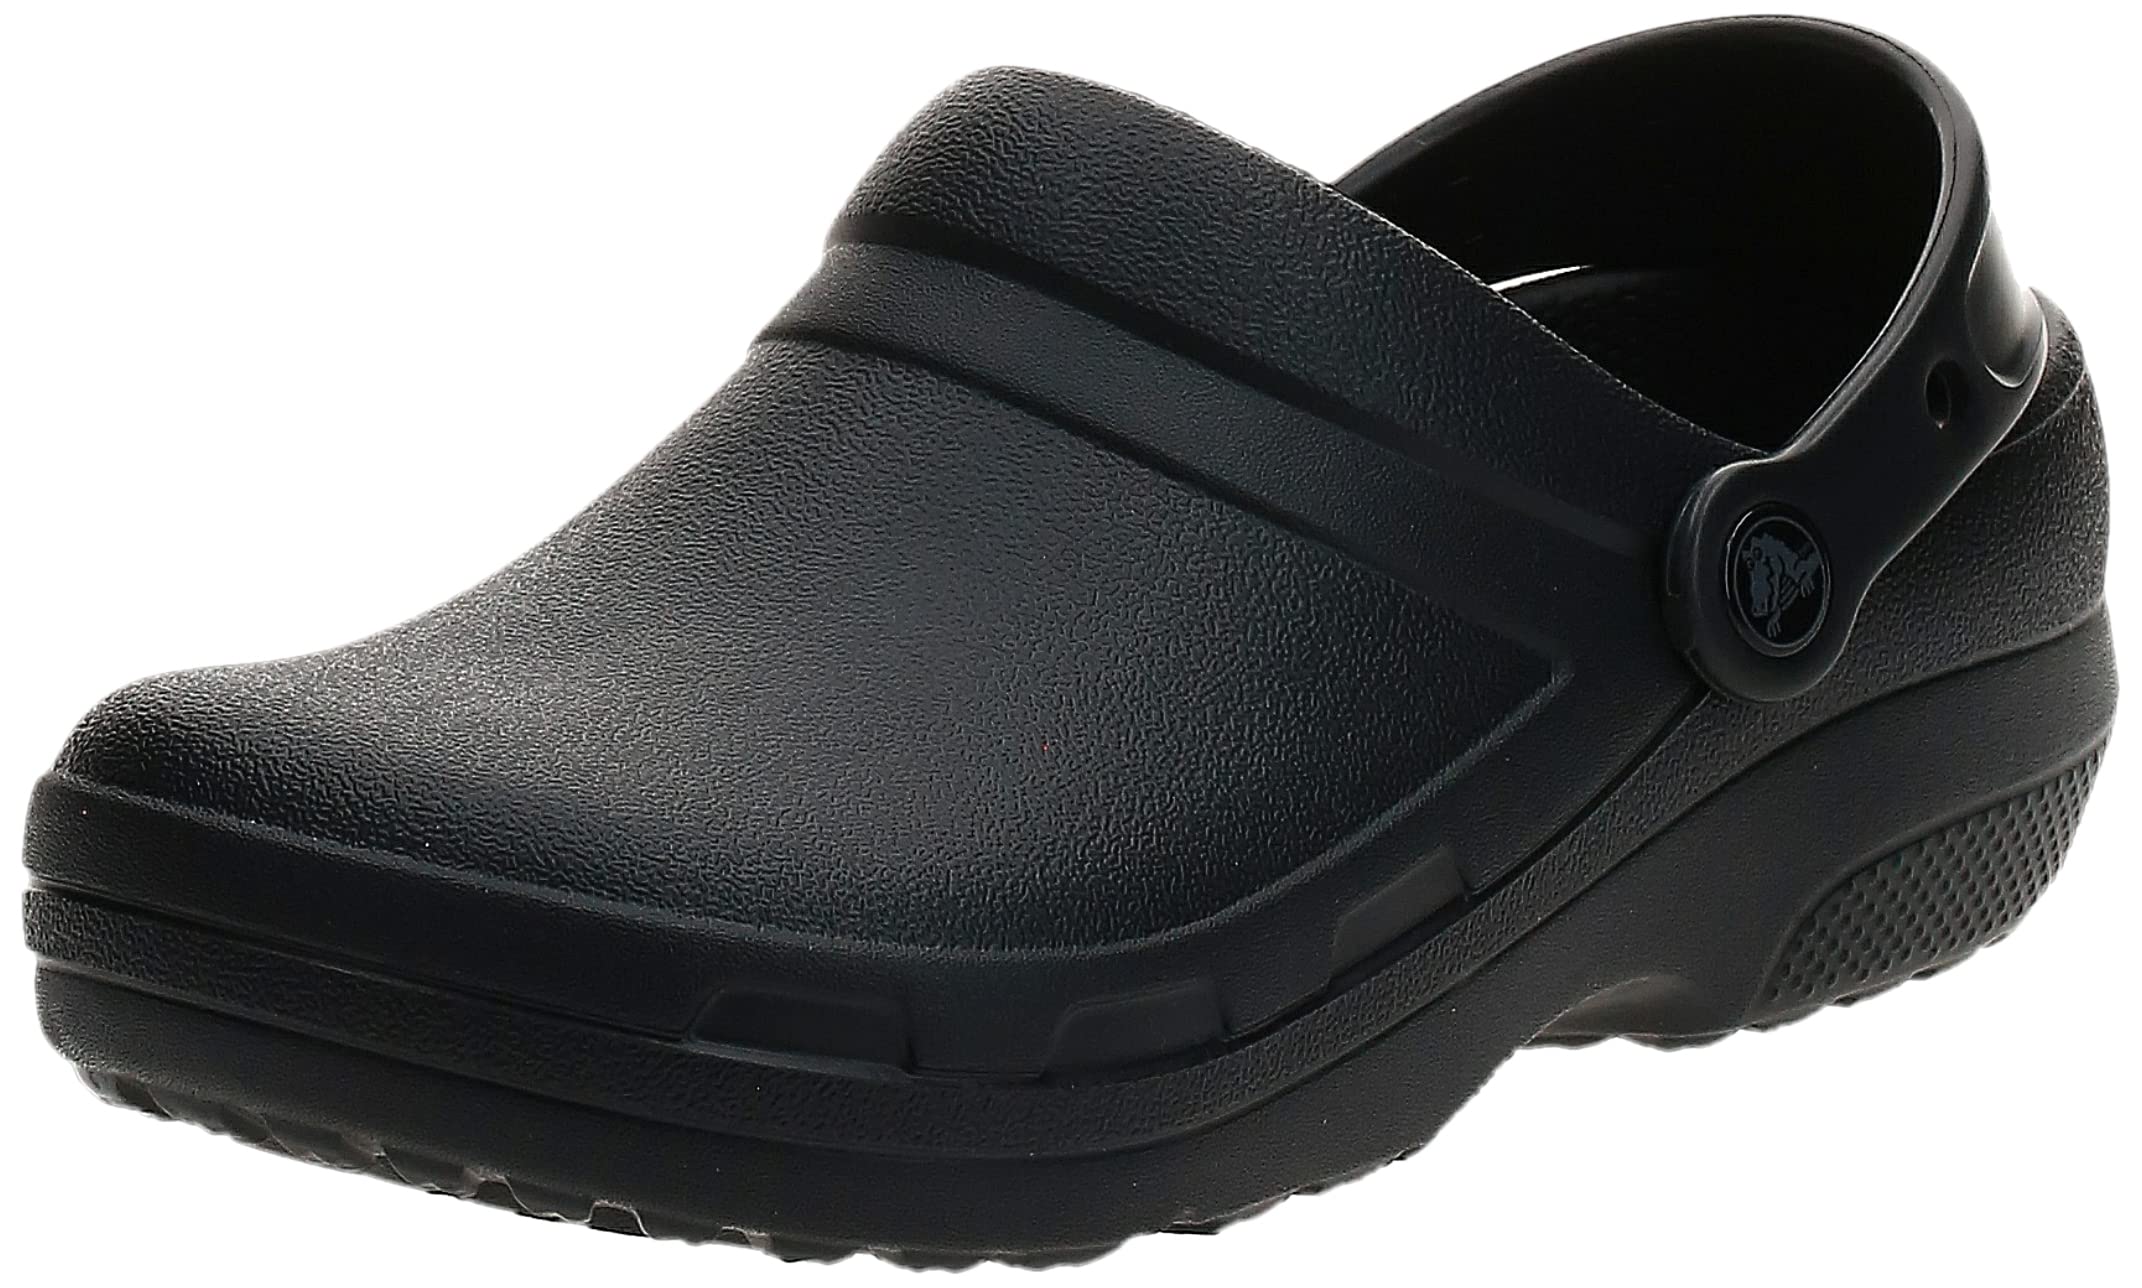 Total 31+ imagen crocs safety shoes